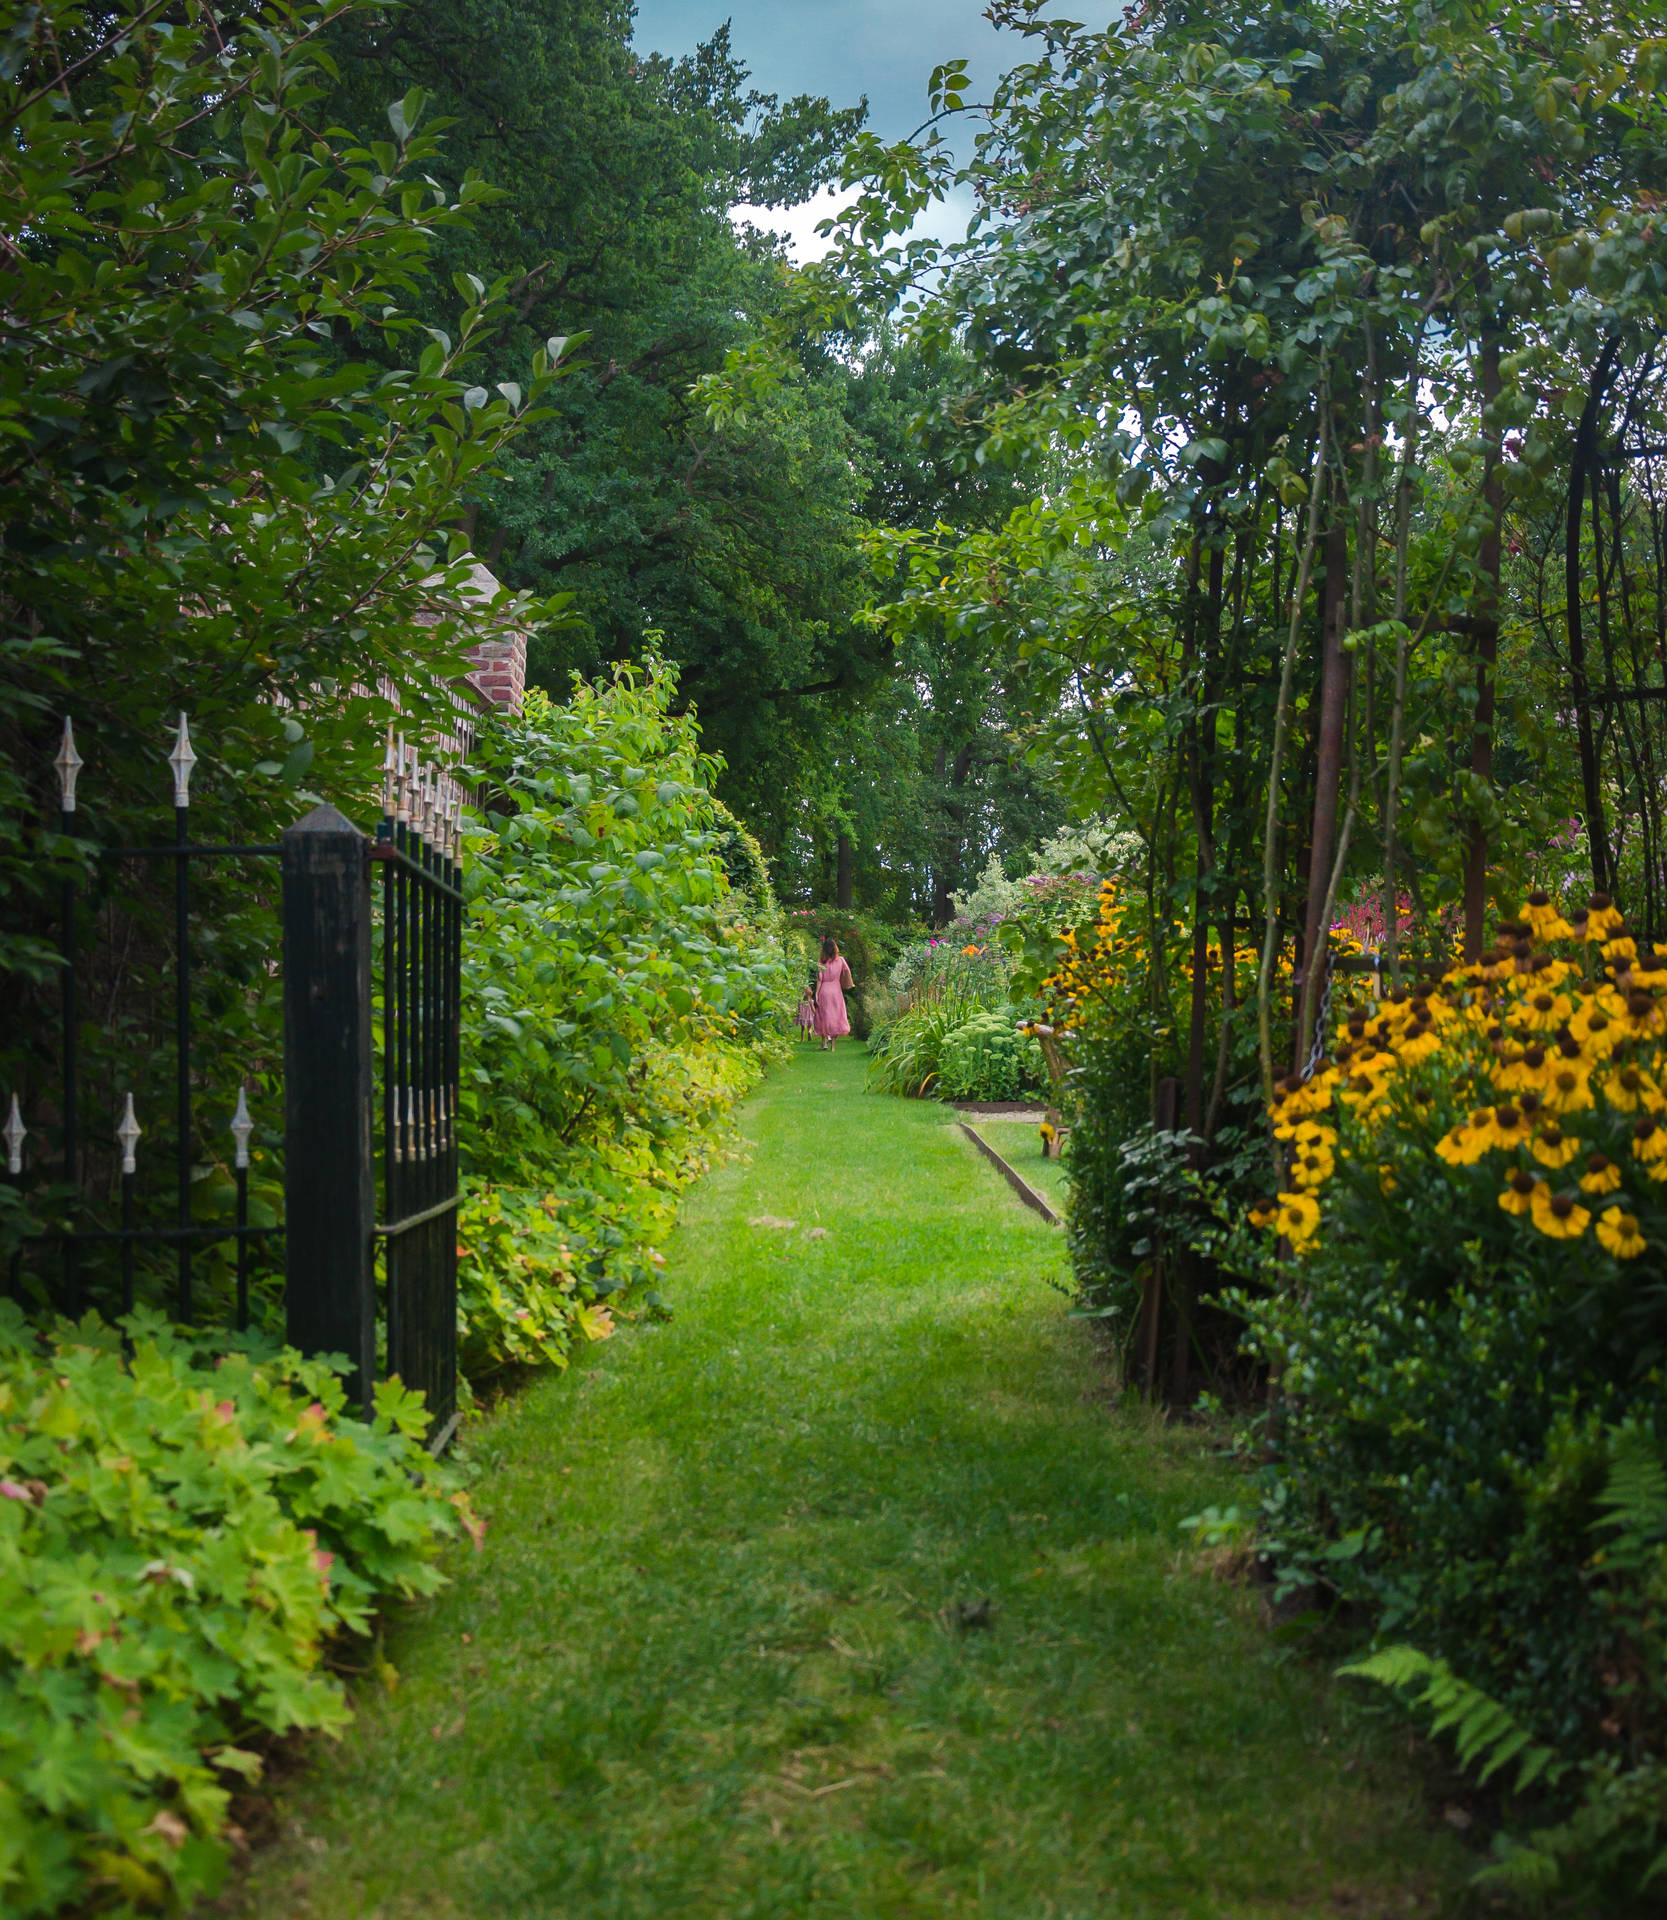 Lush Garden Cottagecore Aesthetic Picture